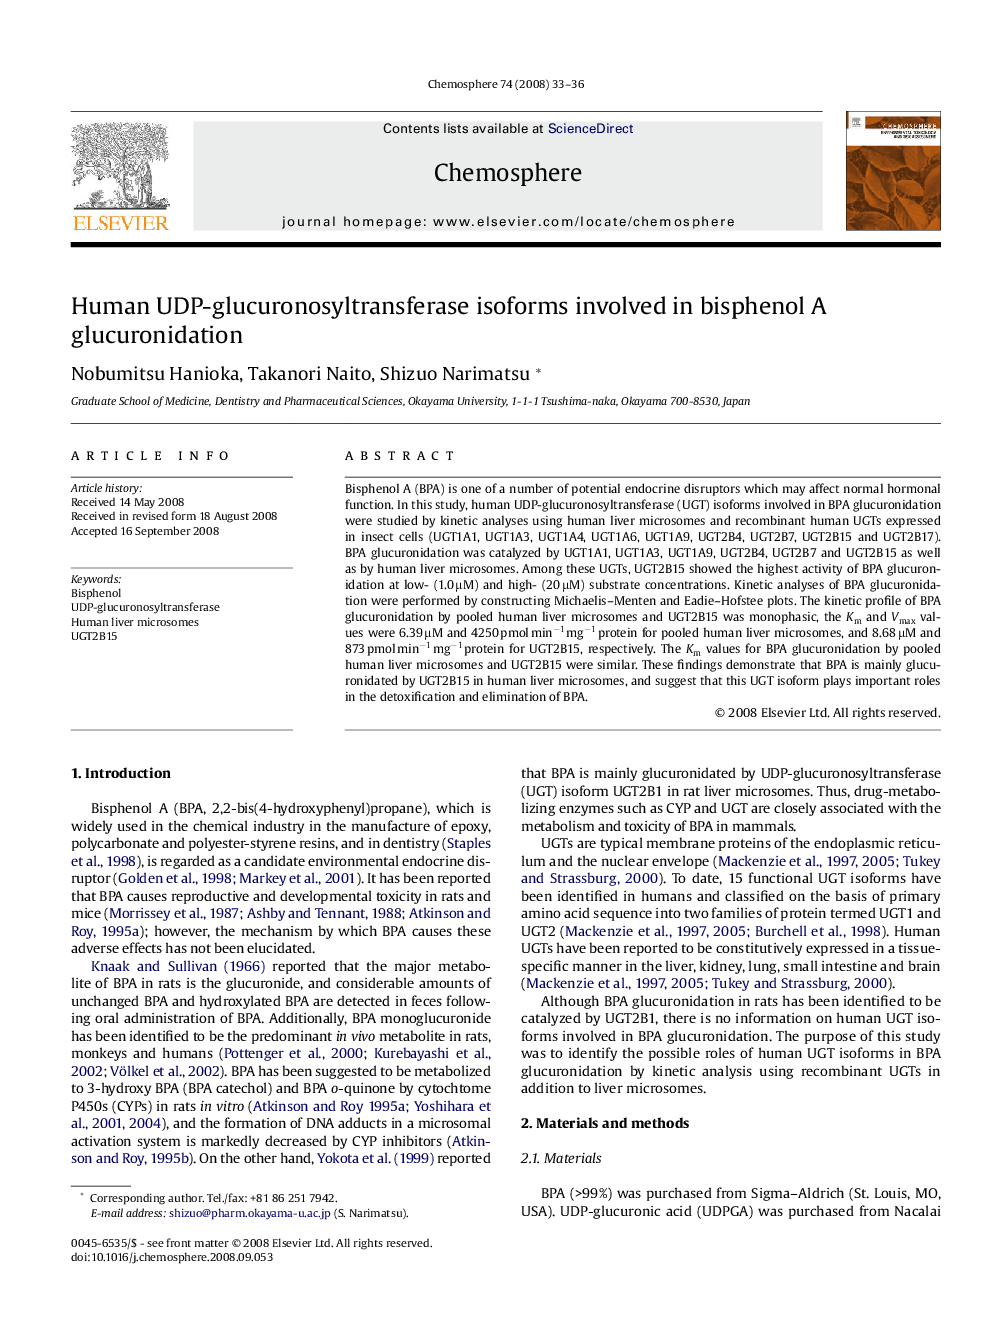 Human UDP-glucuronosyltransferase isoforms involved in bisphenol A glucuronidation